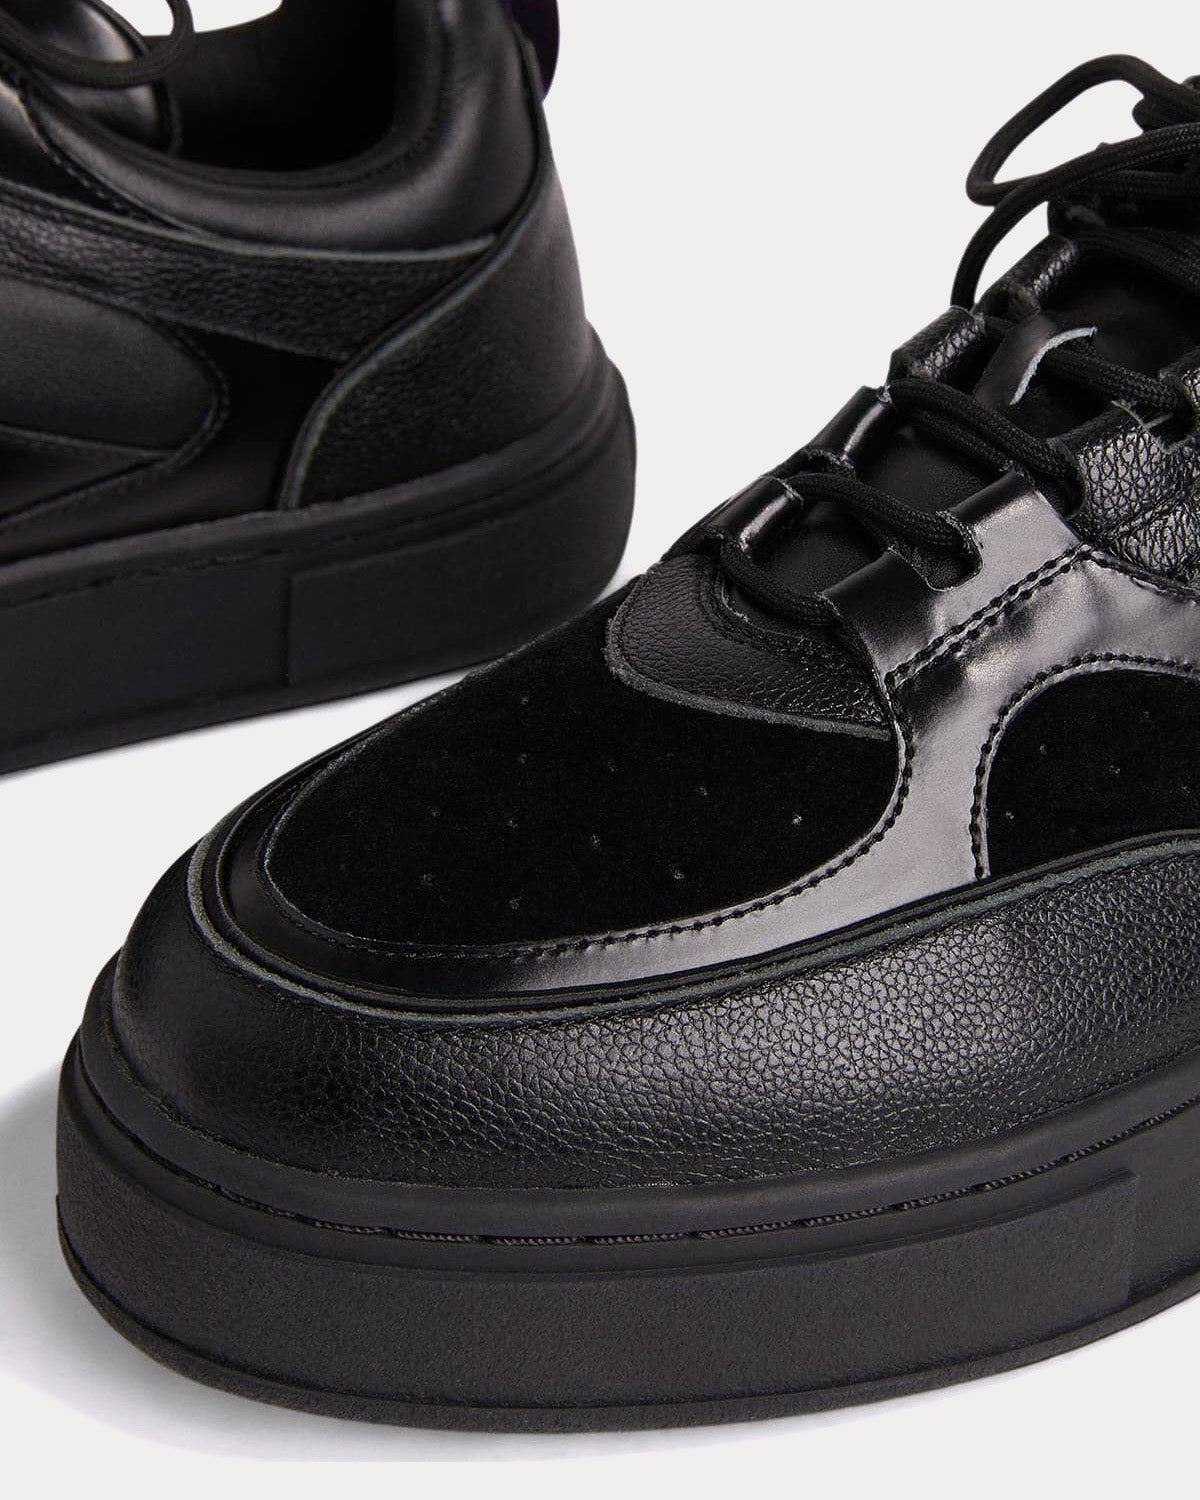 Eytys - Sidney Leather Black / Black Low Top Sneakers